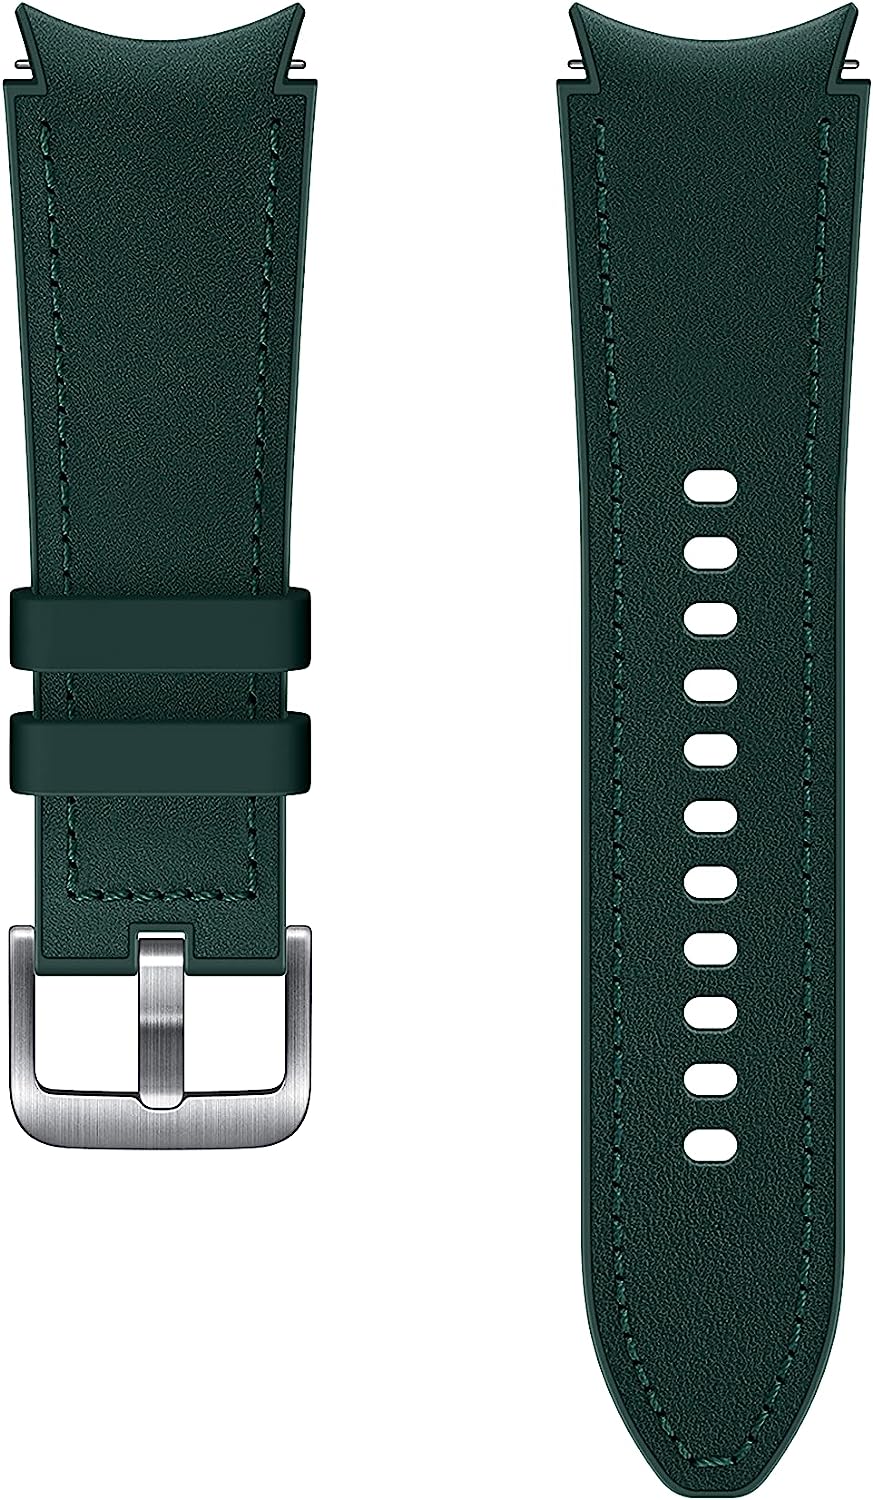 Samsung Hybrid Leather Silicone Watch Band for Galaxy Watch Small/Medium - Green (New)